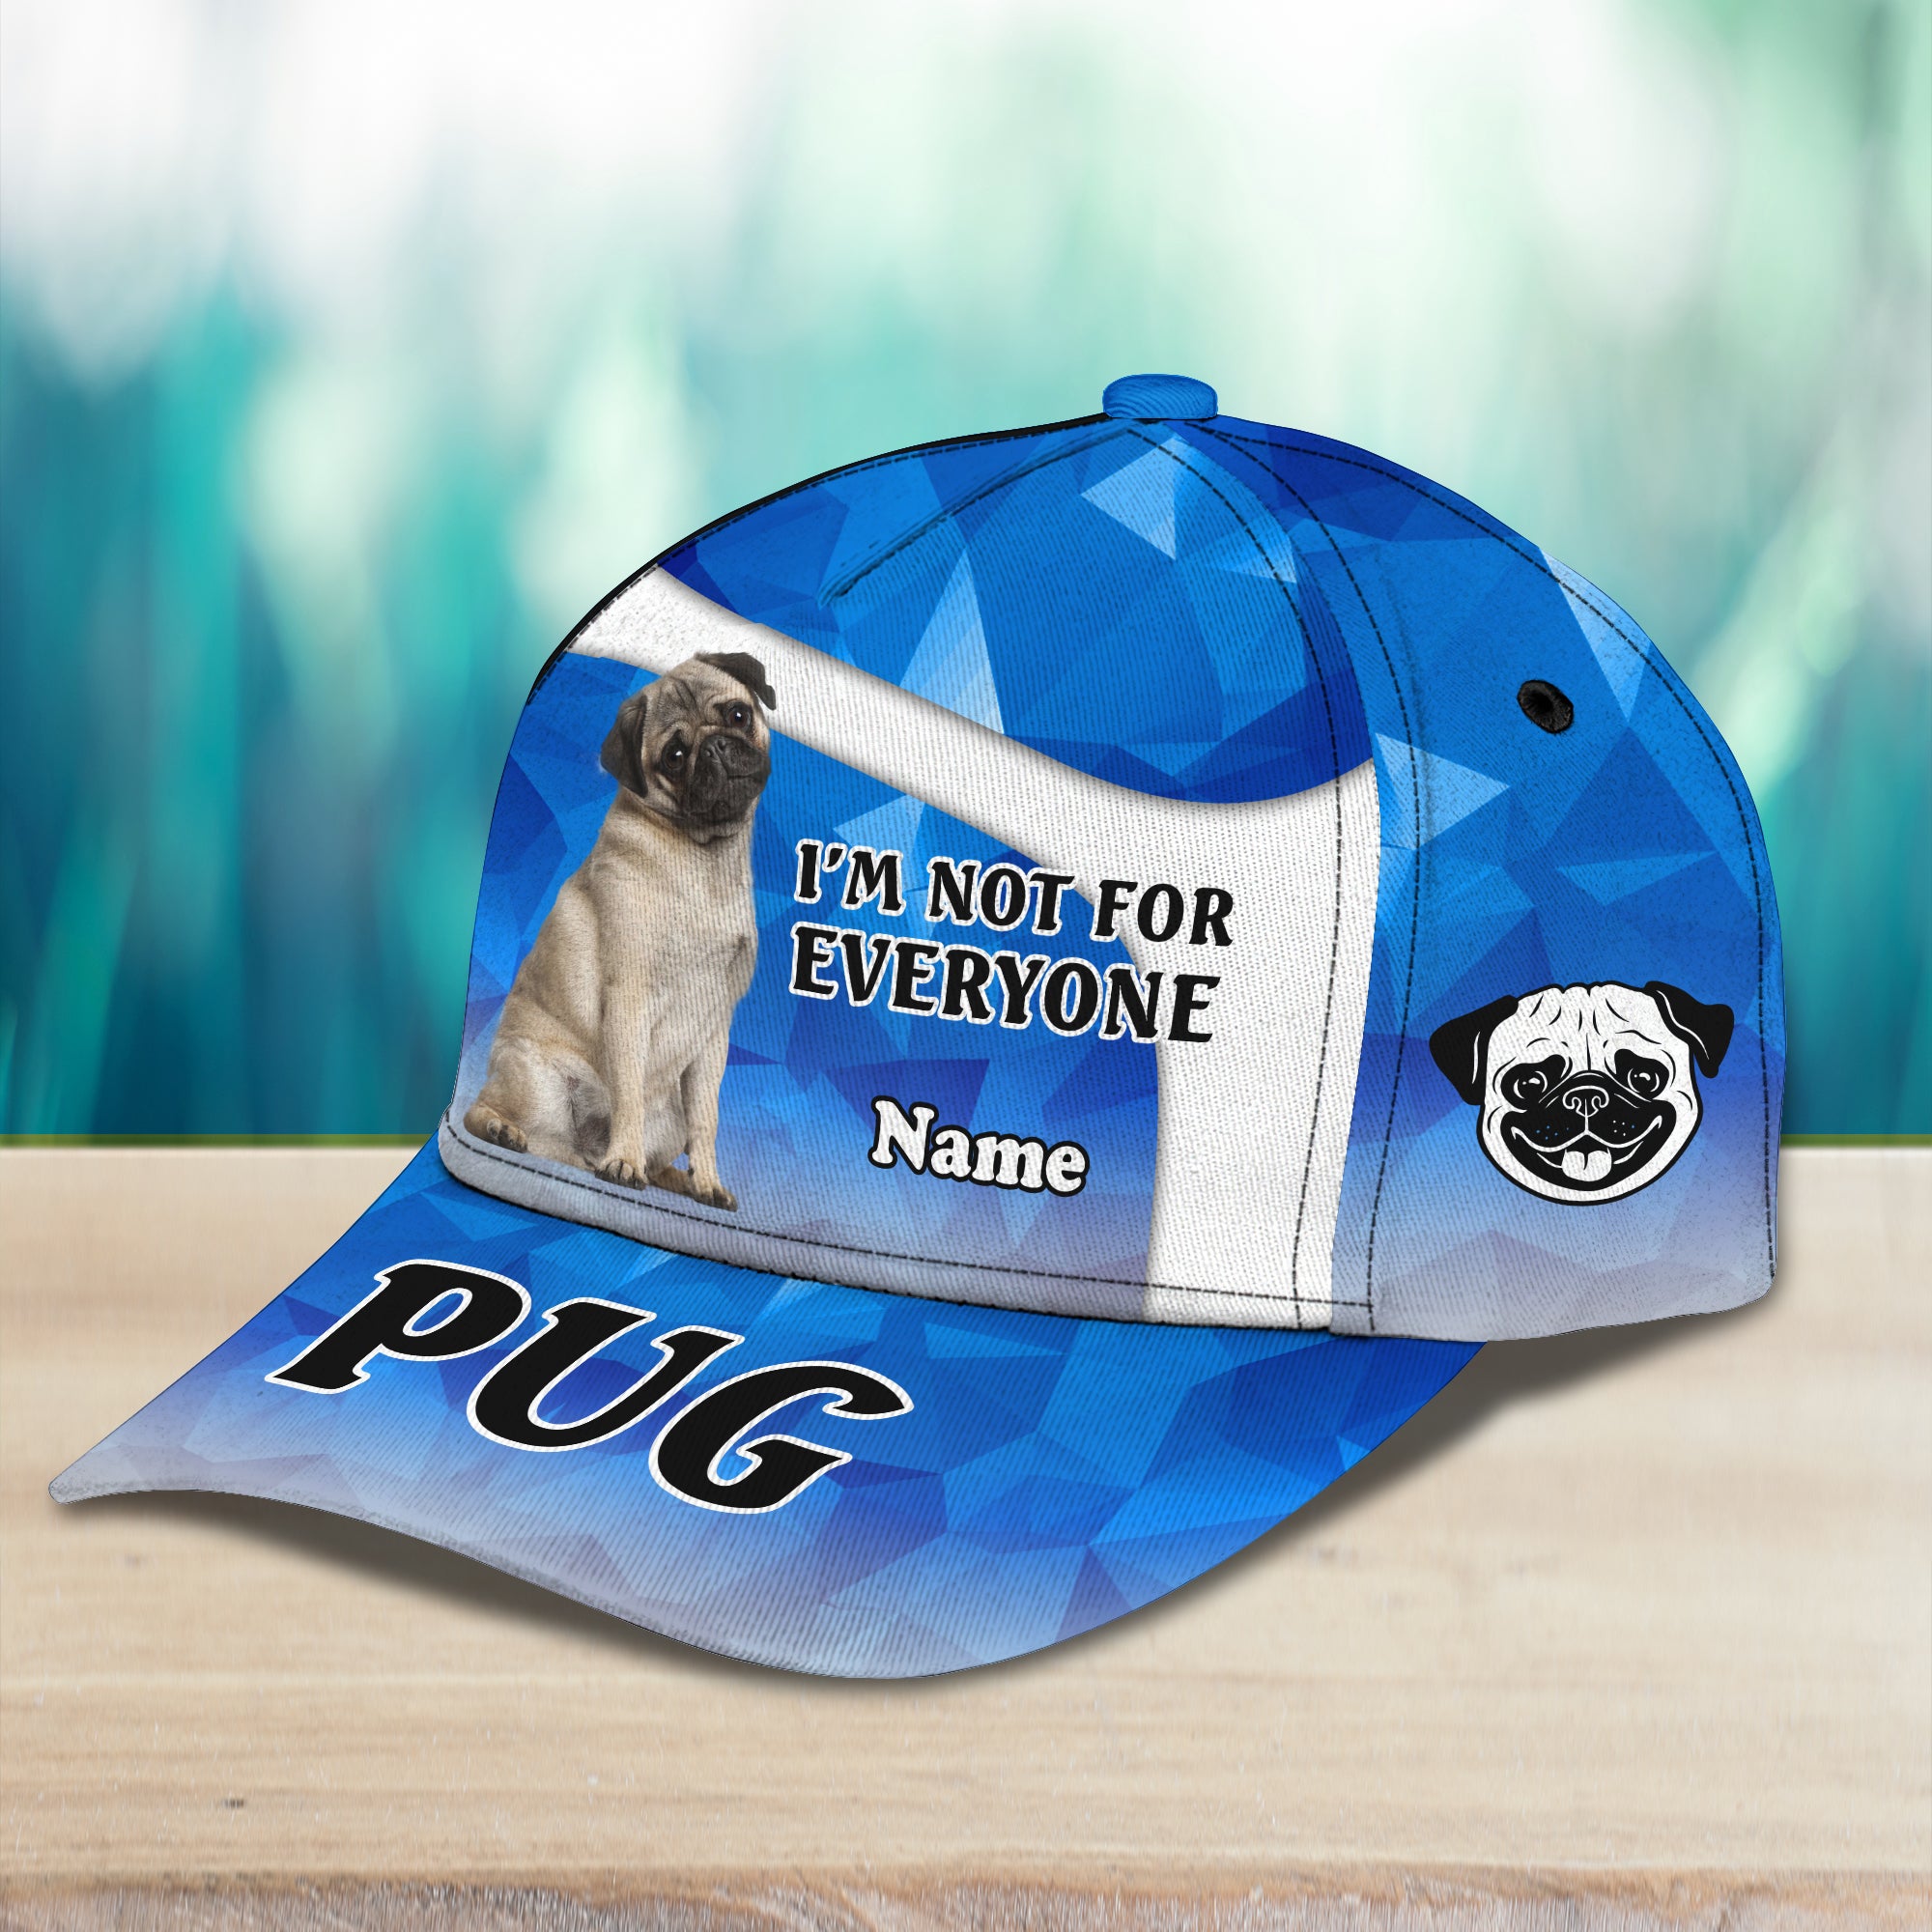 My Dog 3 -Pug - Personalized Name Cap -Loop- T2k -162